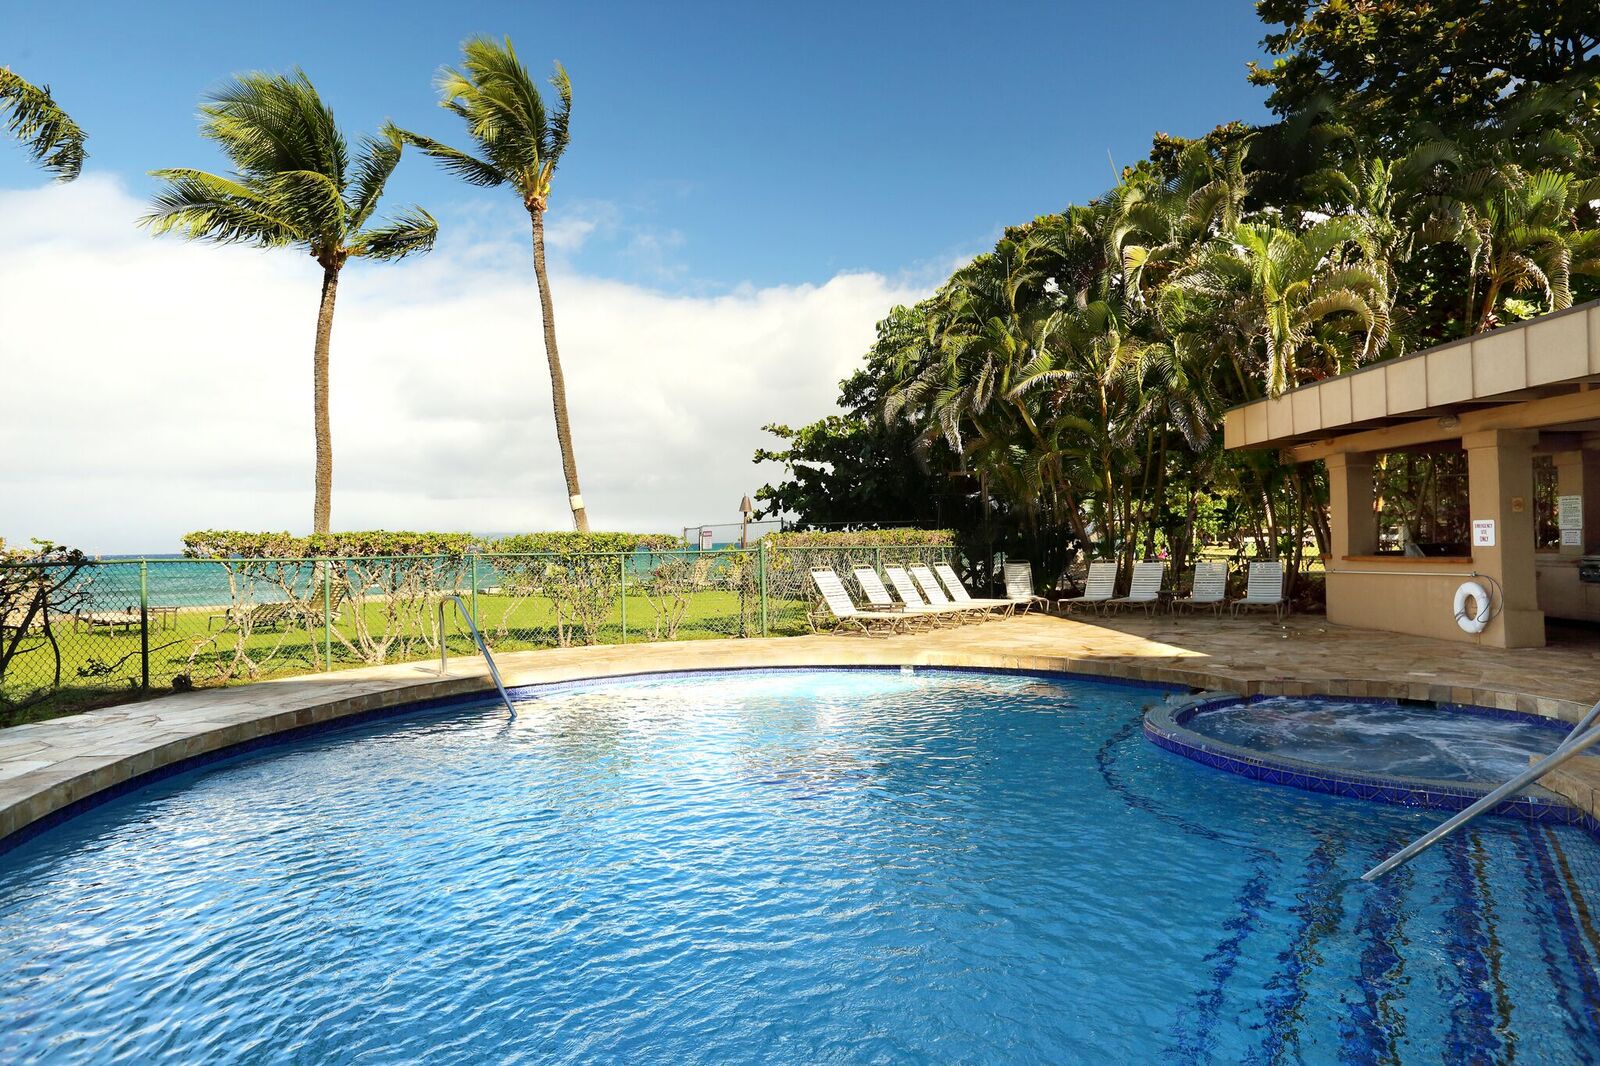 Lahaina Vacation Rentals, Paki Maui 313 - Ocean side Pool & Spa with Amazing views